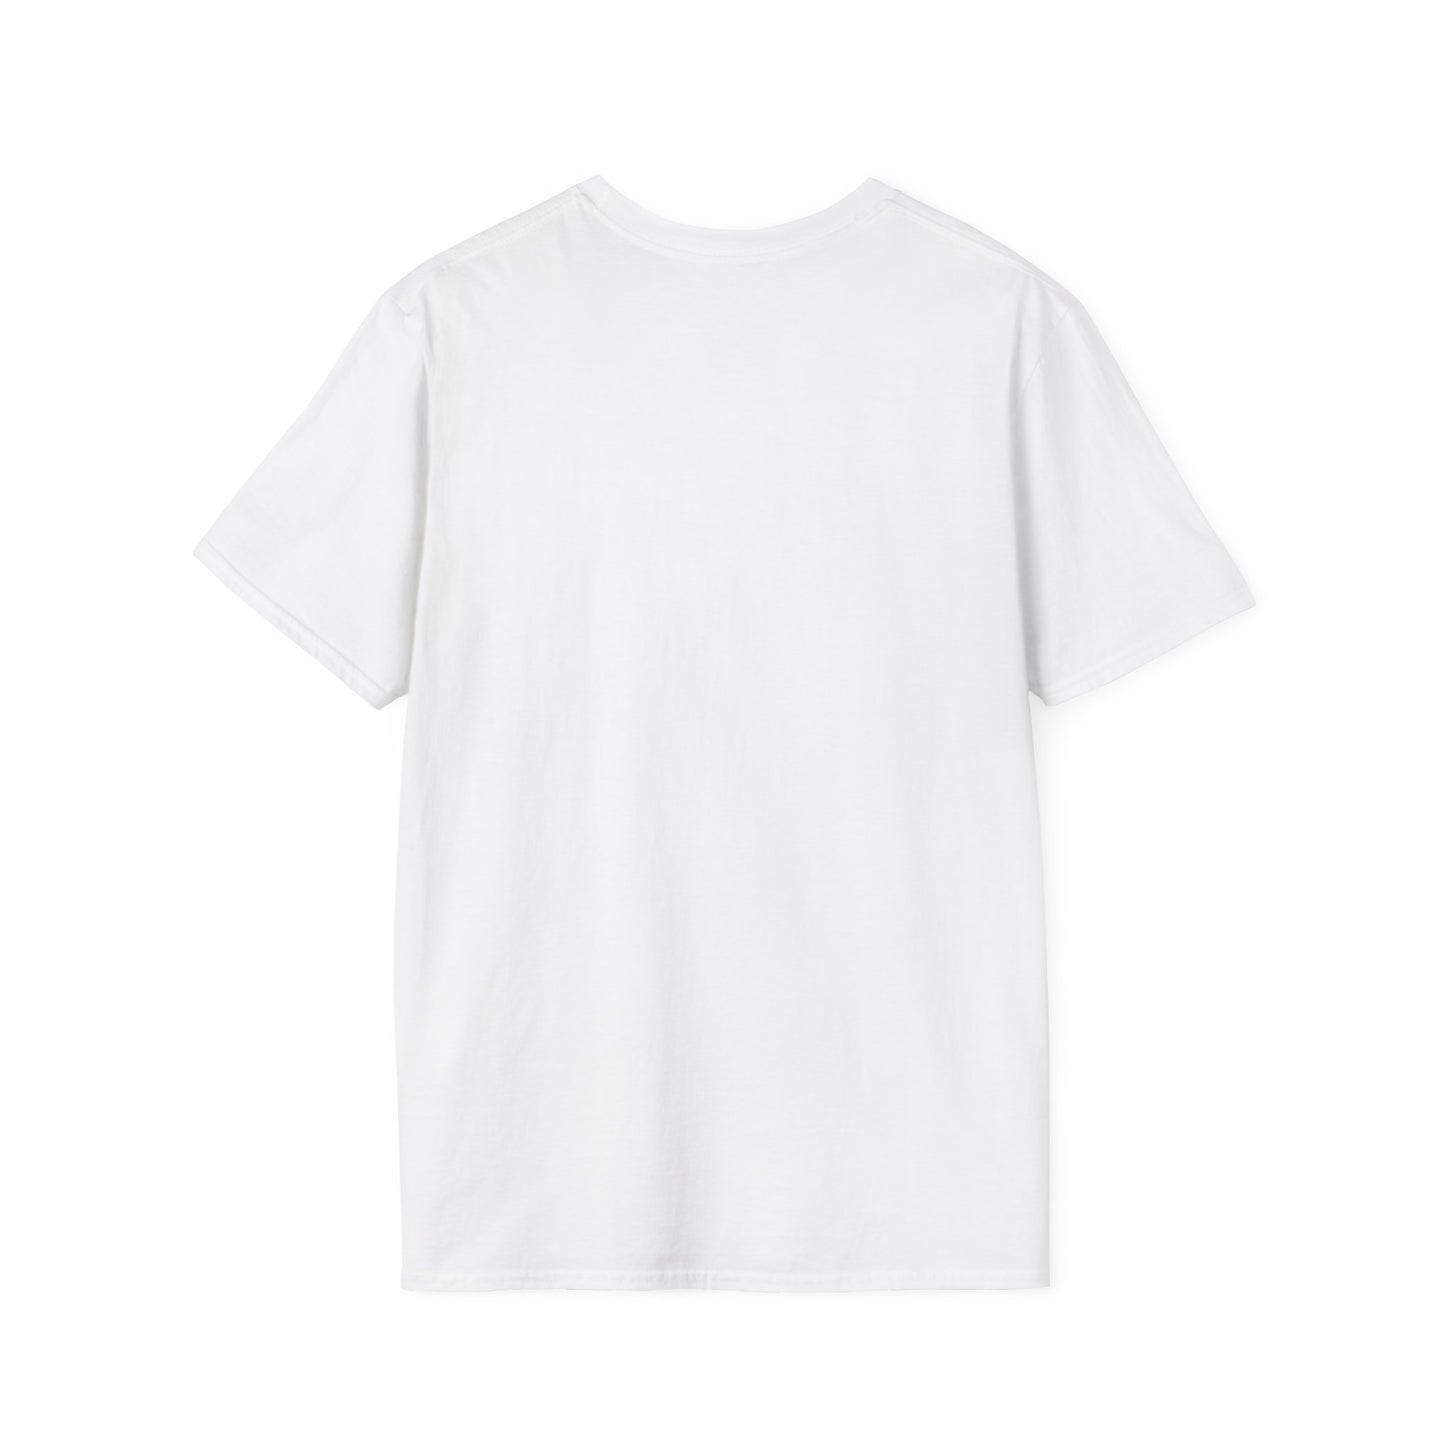 Hello Sunshine Unisex Soft-Style Cotton T-Shirt